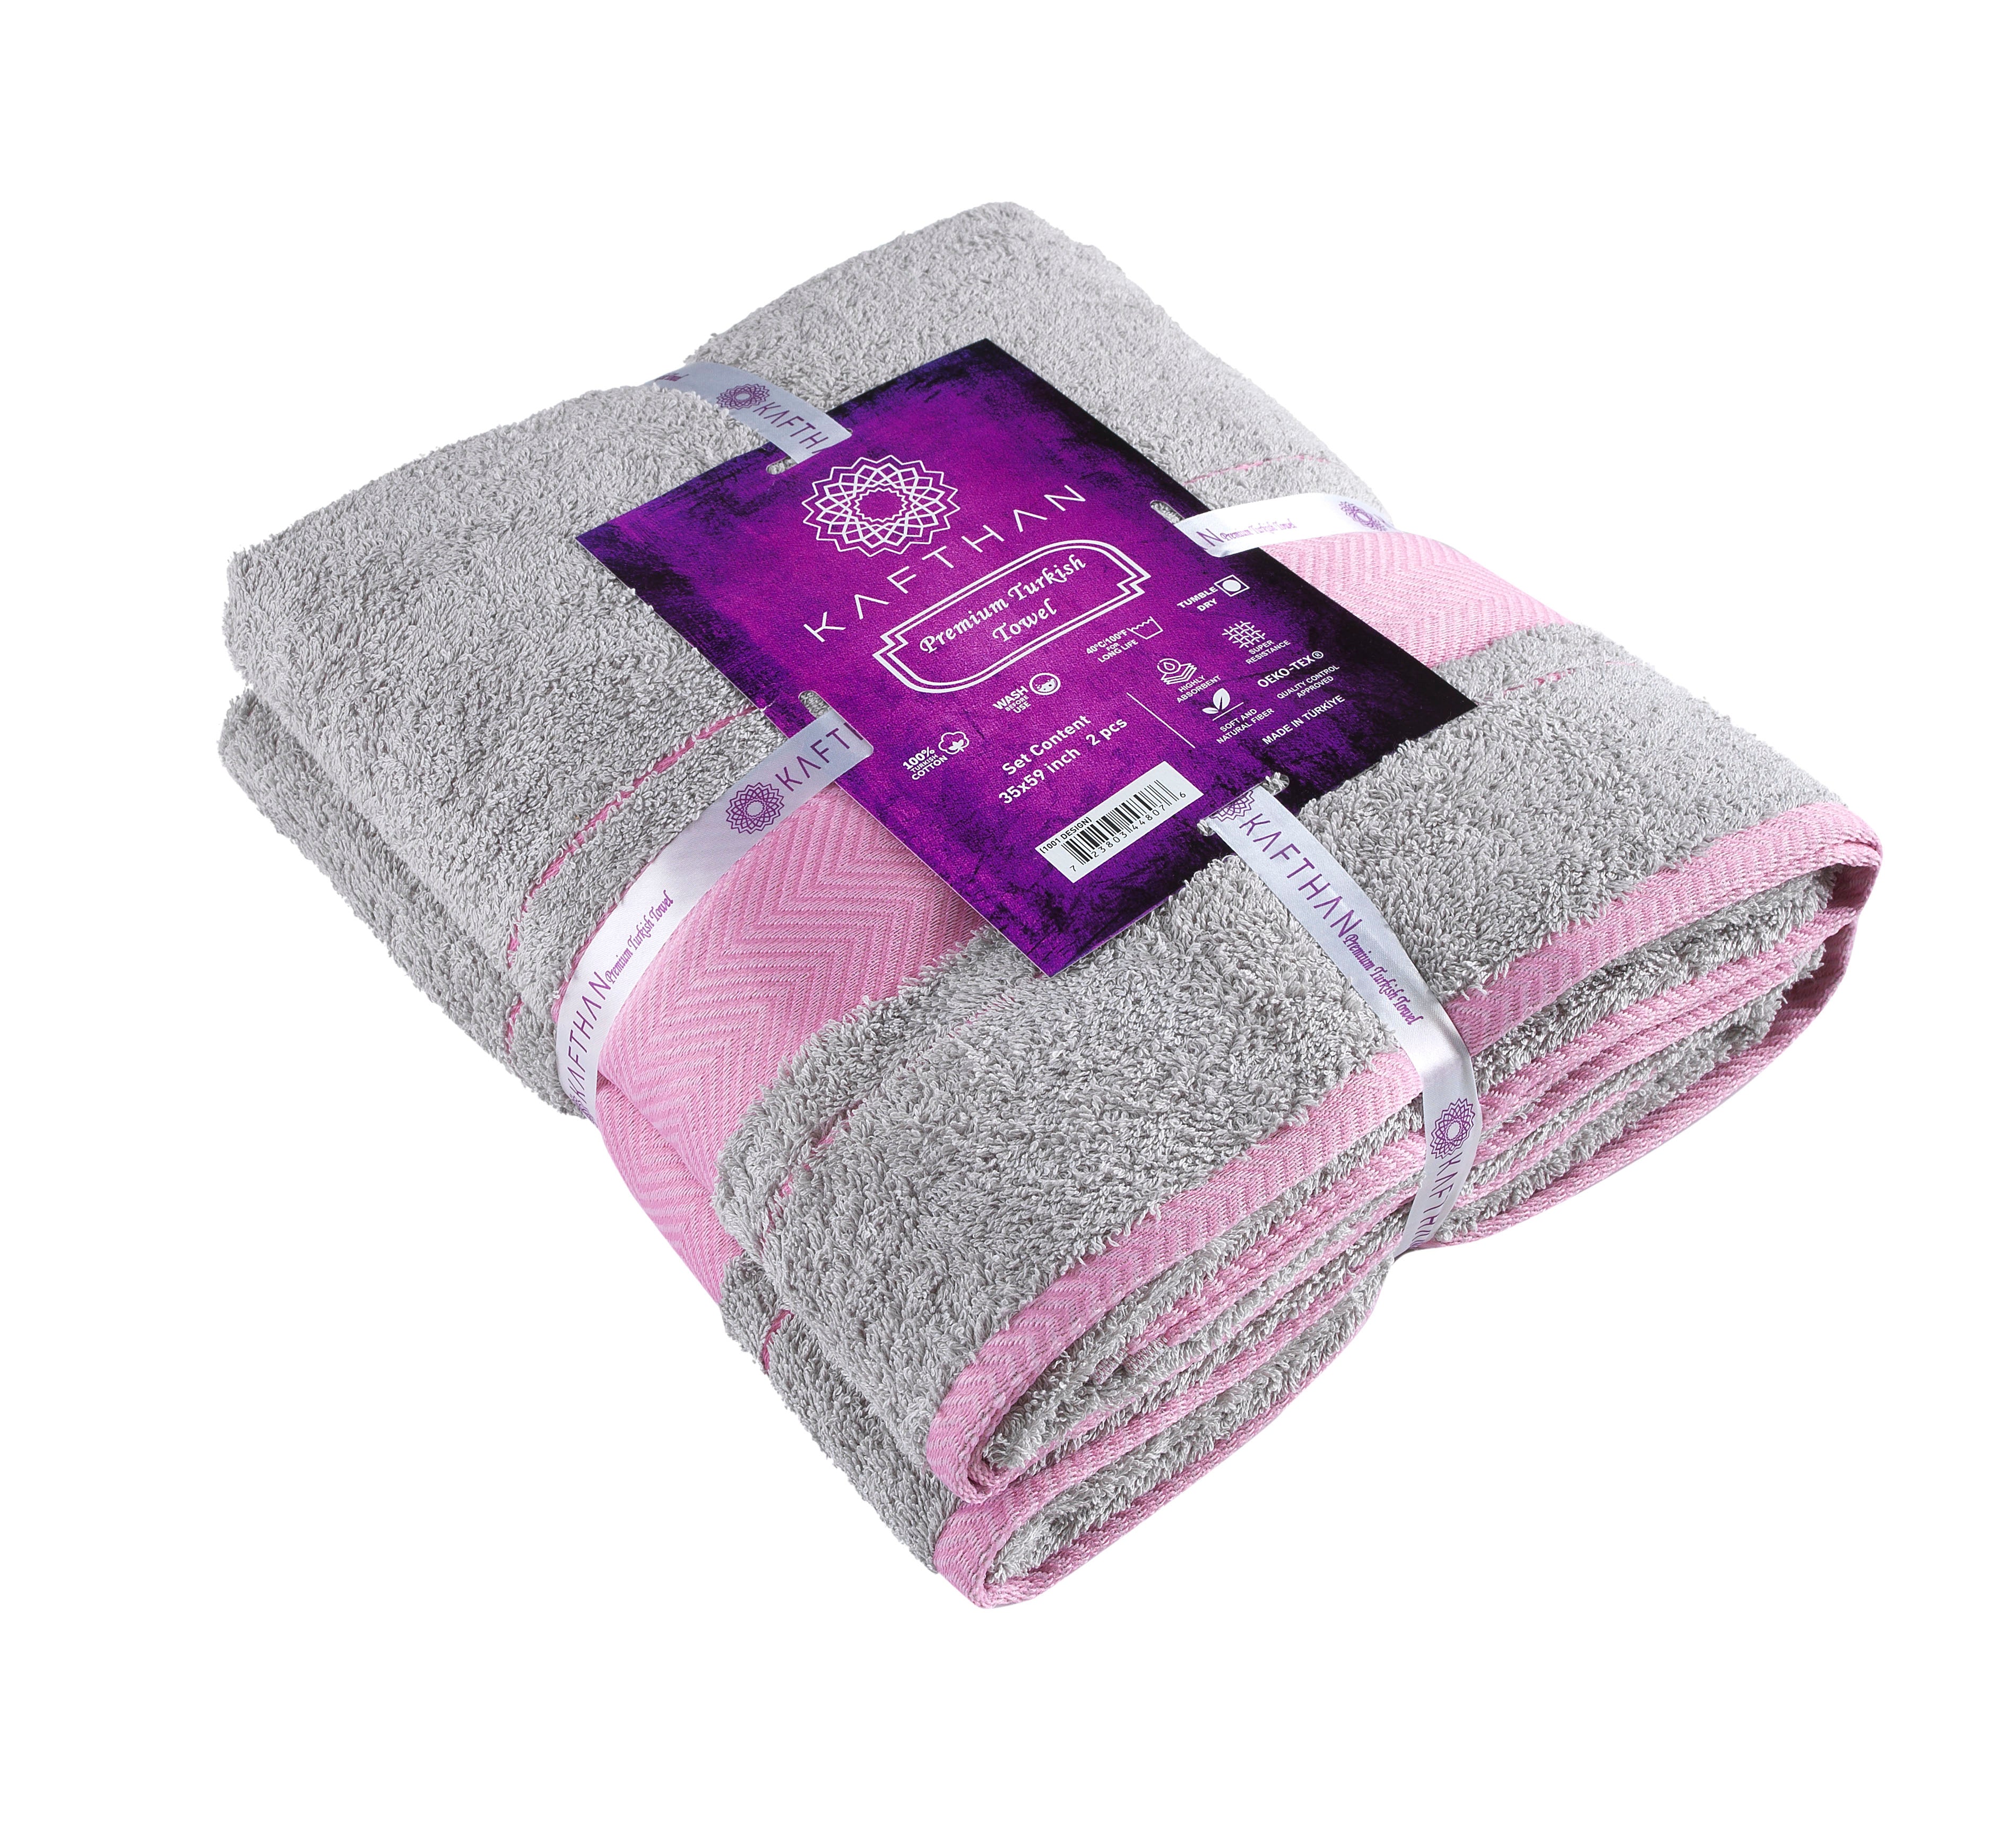 Fishbone Bath Towel, Cotton Turkish Towels - Set of 2